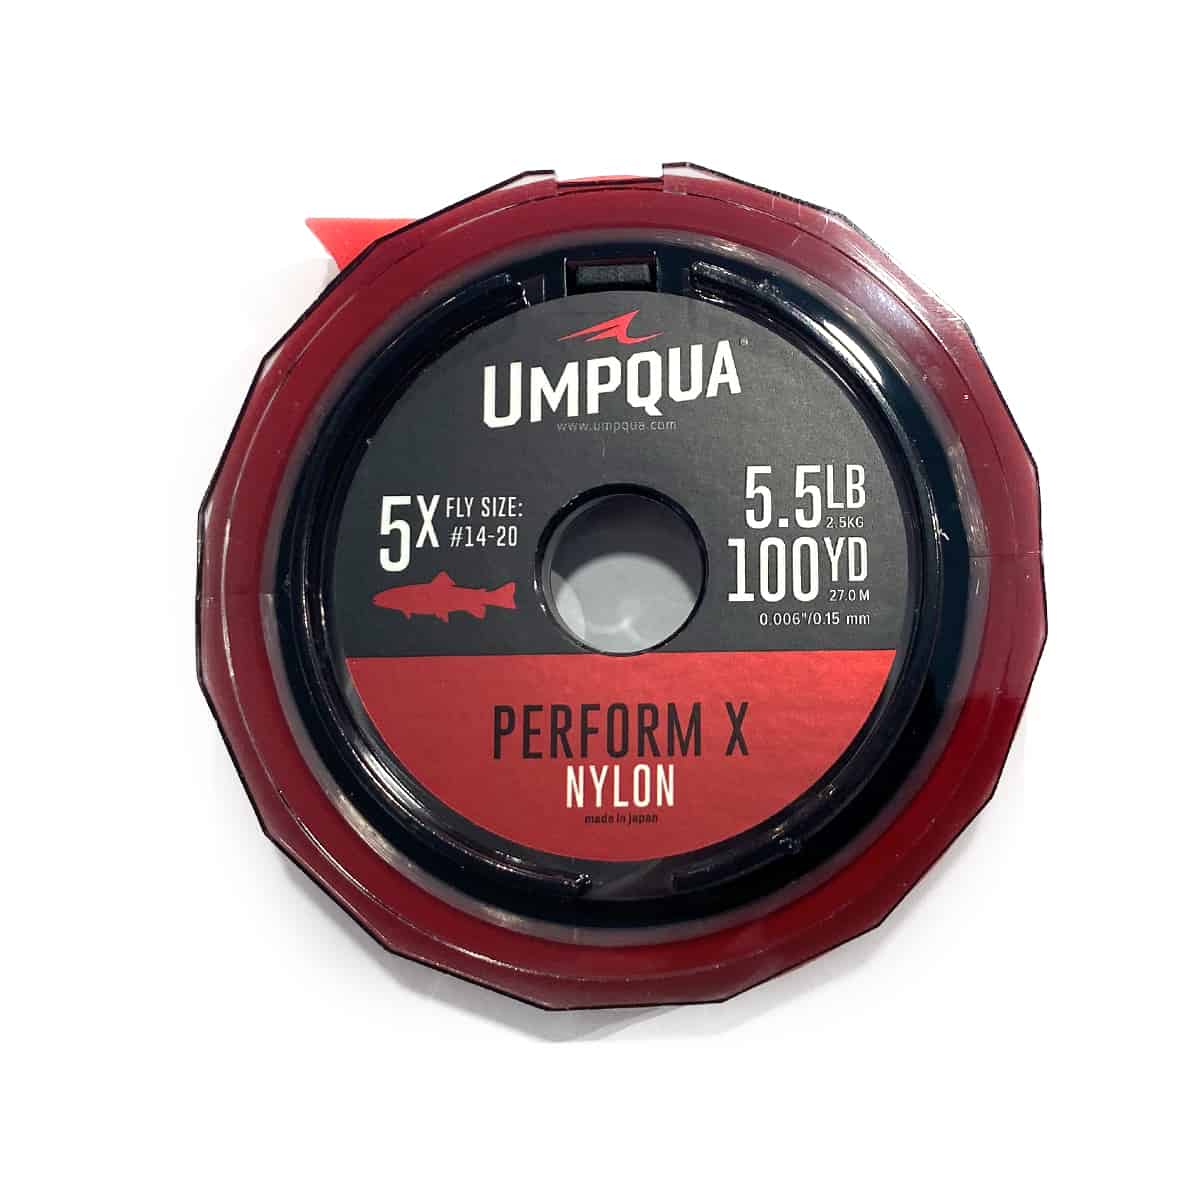 Umpqua Perform x Trout Nylon Tippet 100yds - 5X